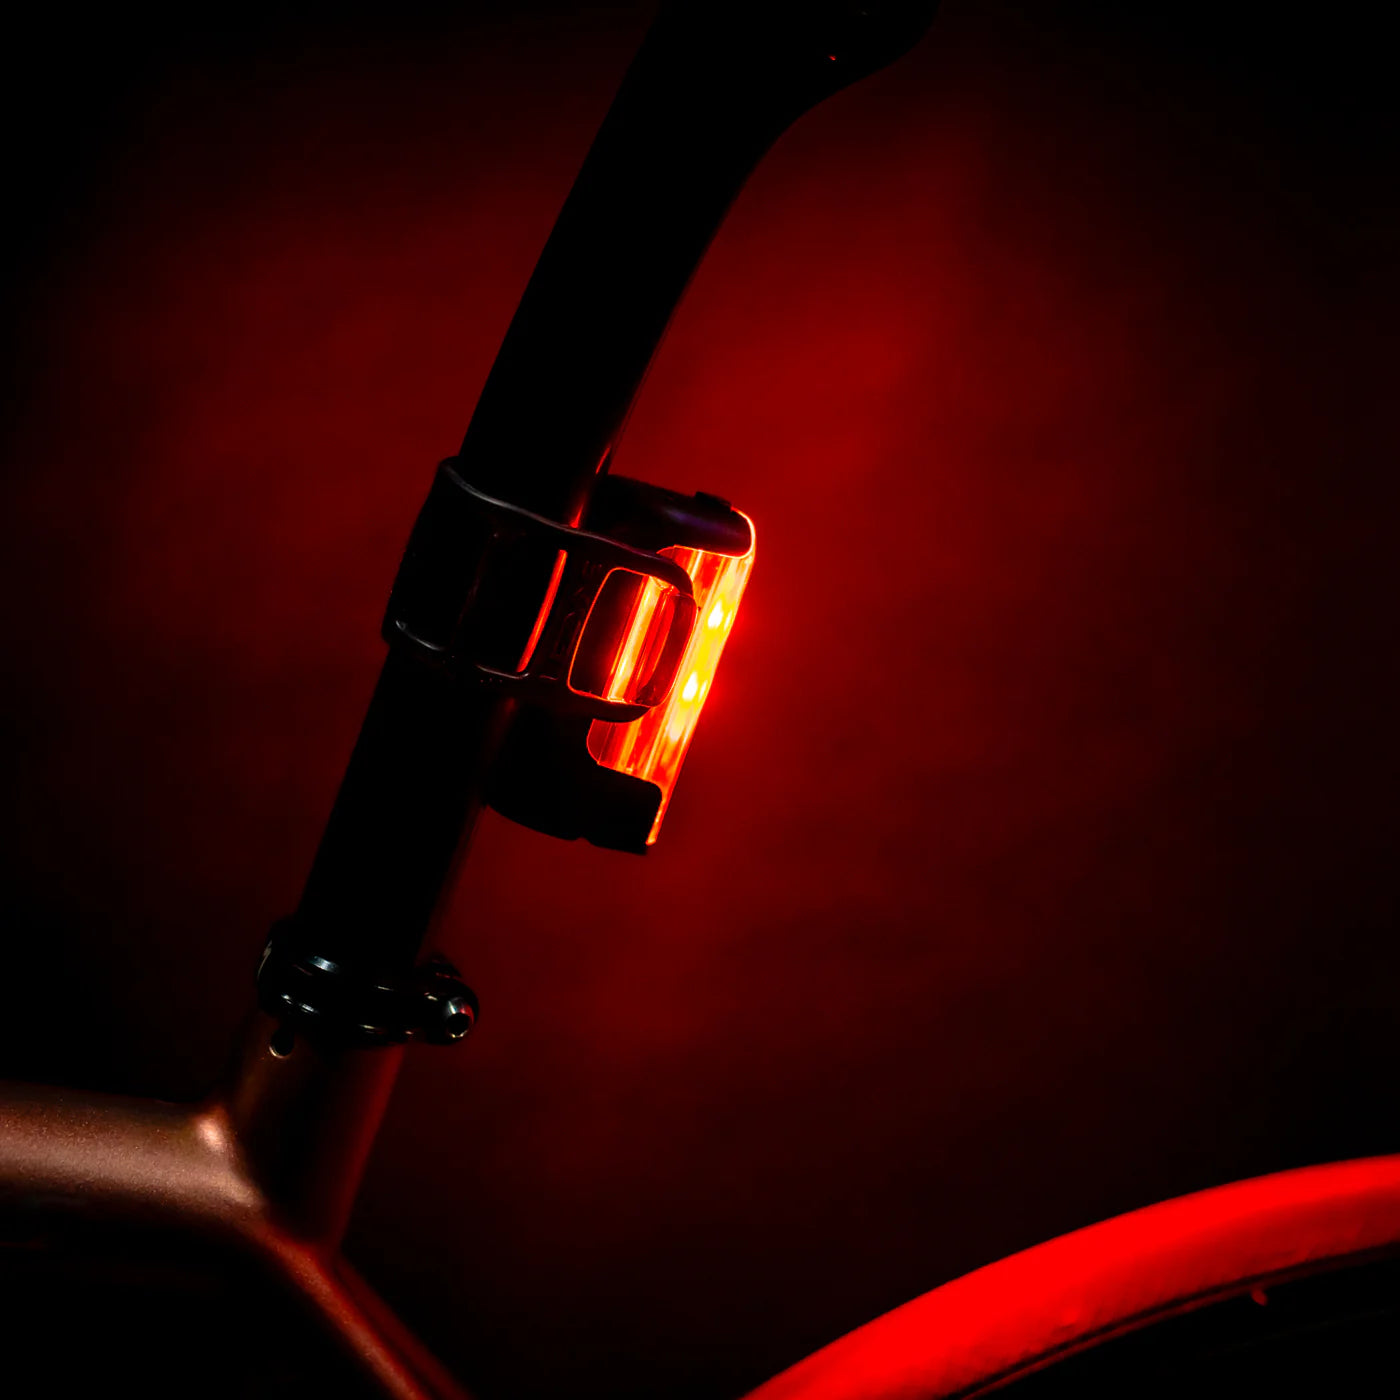 Strip Drive Pro 400+ Rear Light illuminated on a road bike